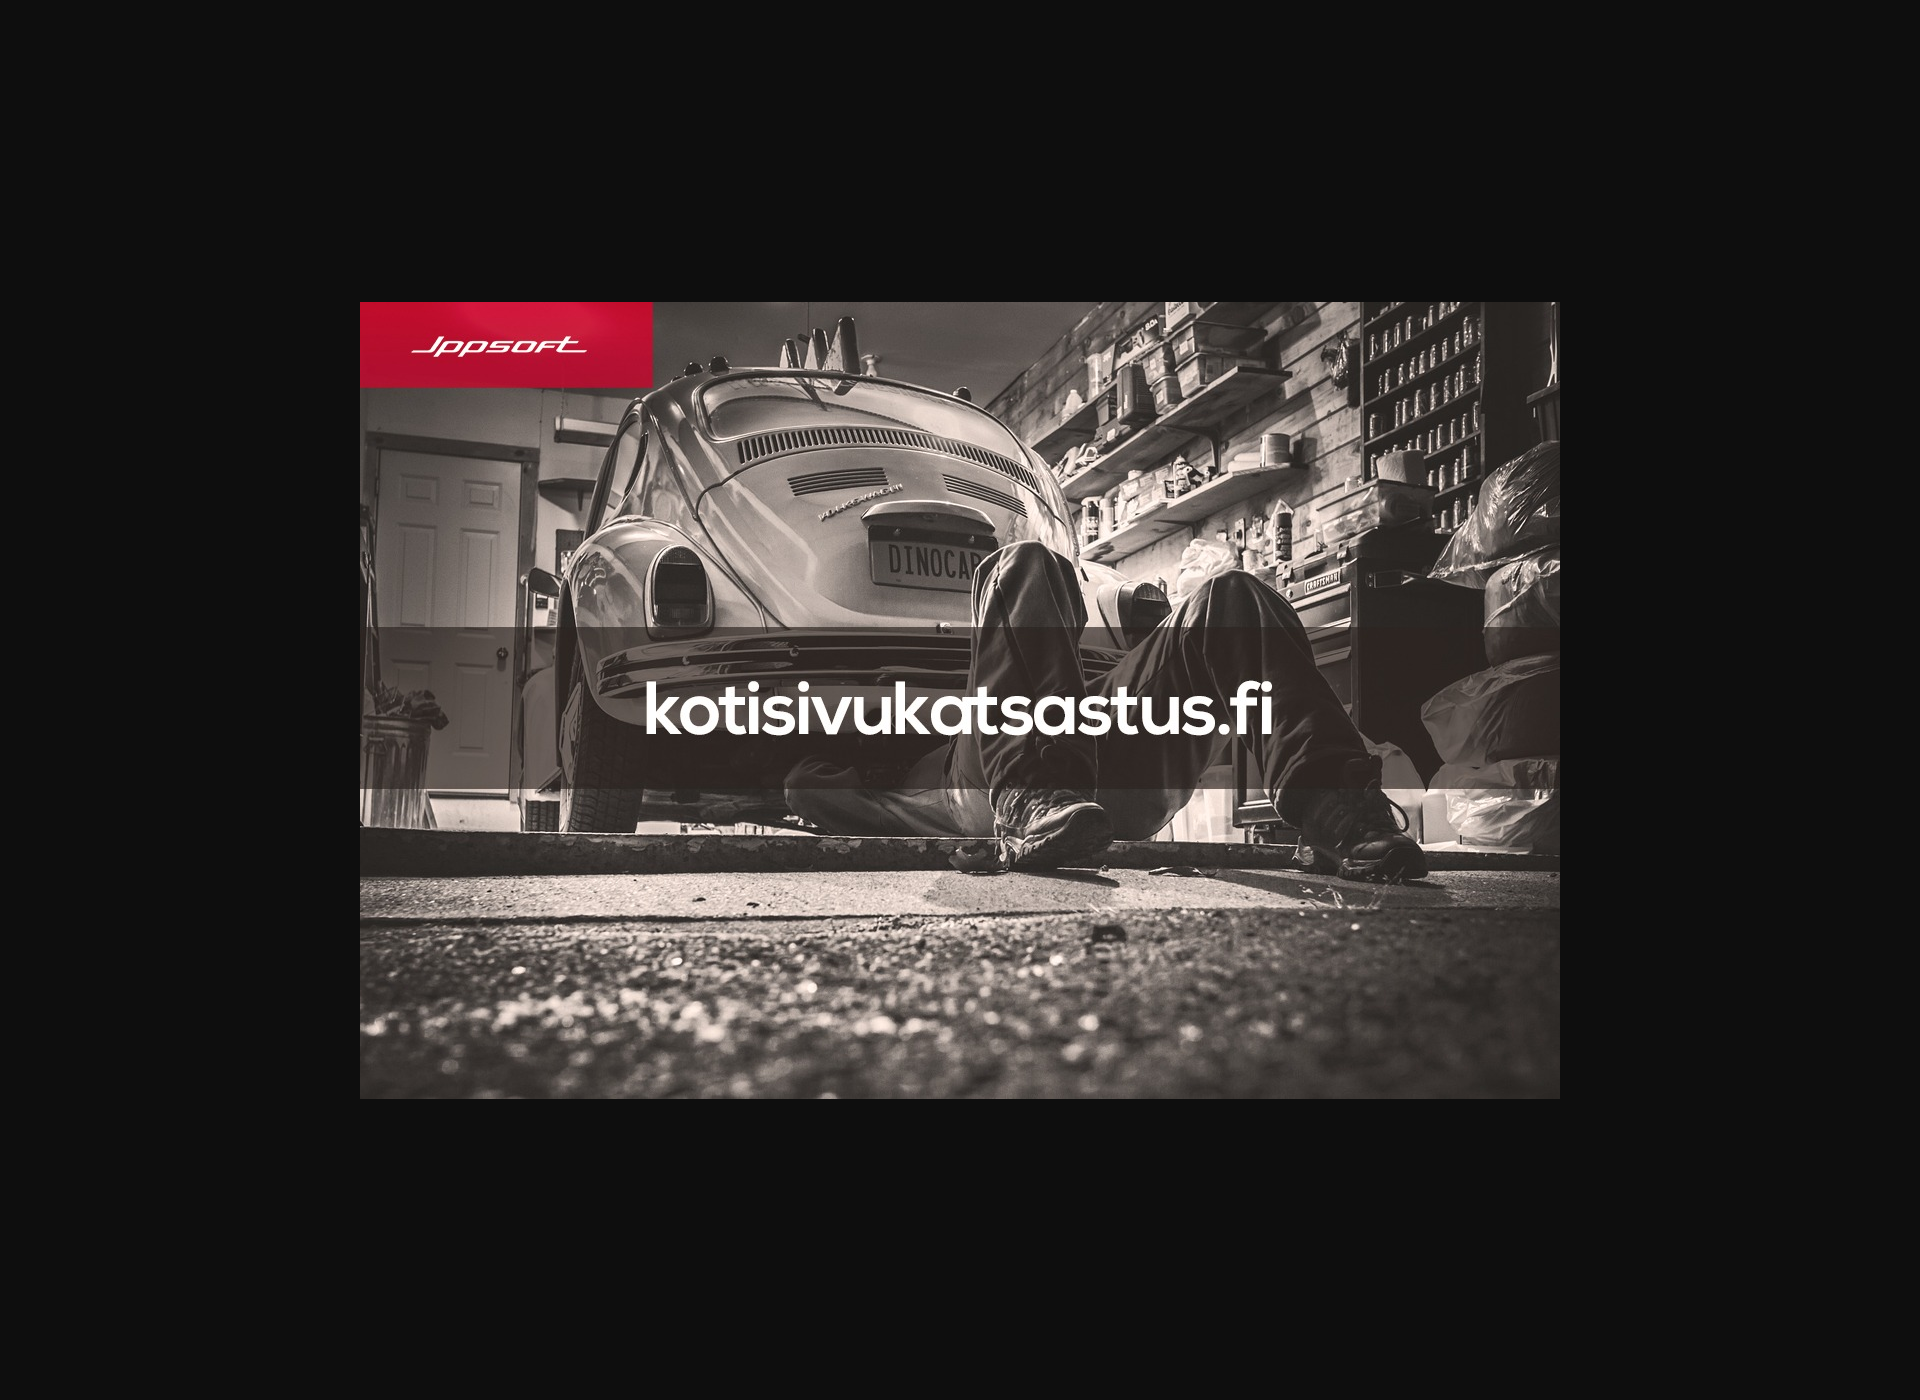 Screenshot for verkkosivukatsastus.fi